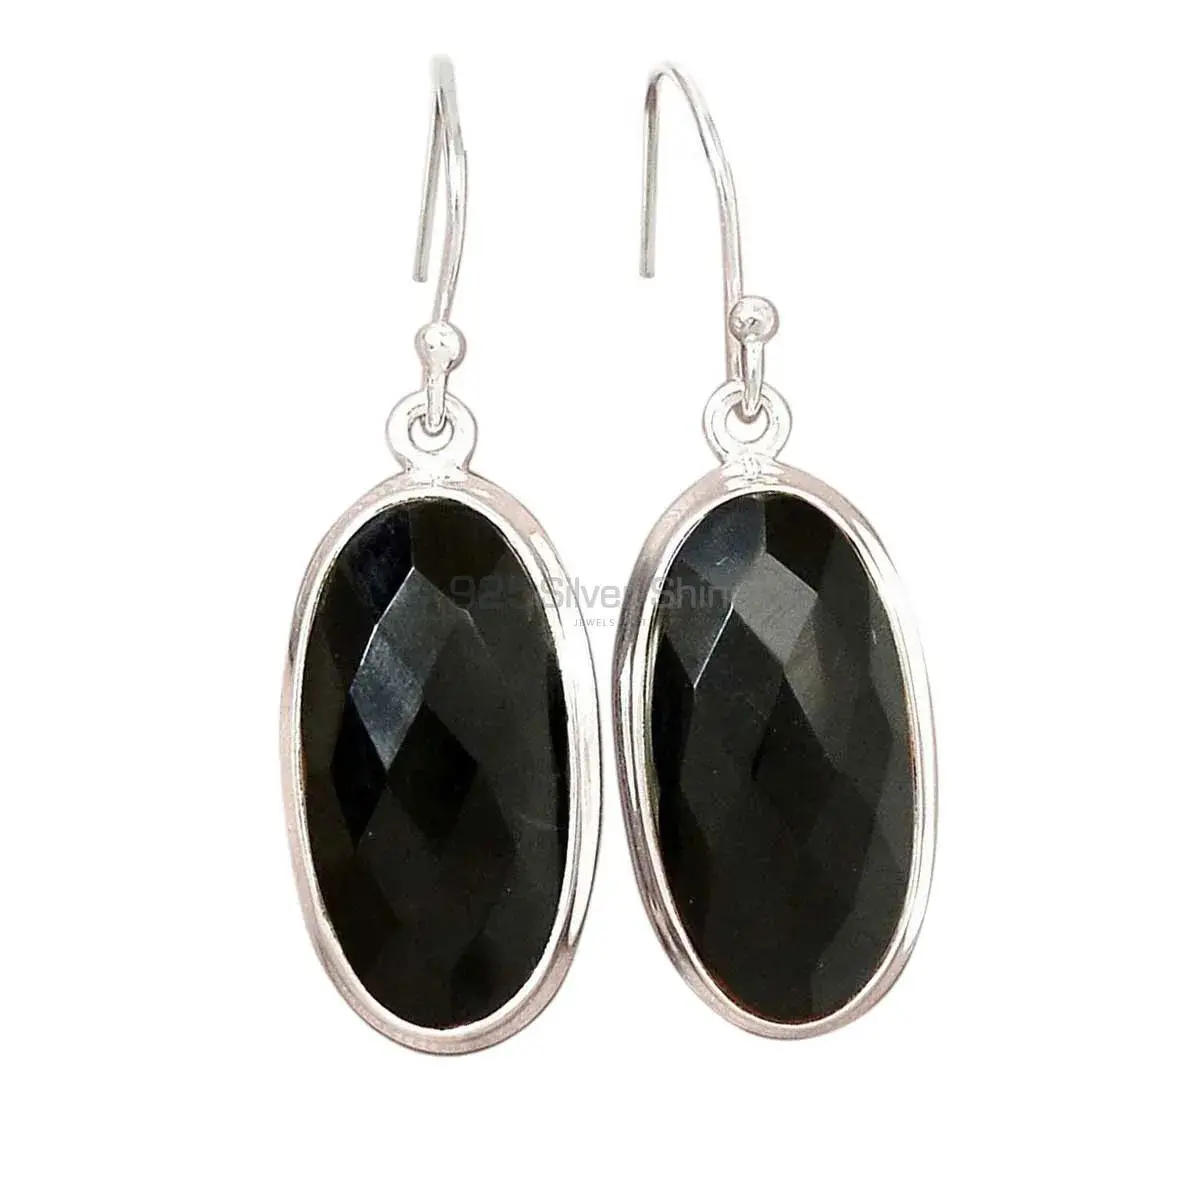 Unique 925 Sterling Silver Handmade Earrings Exporters In Black Onyx Gemstone Jewelry 925SE2710_9